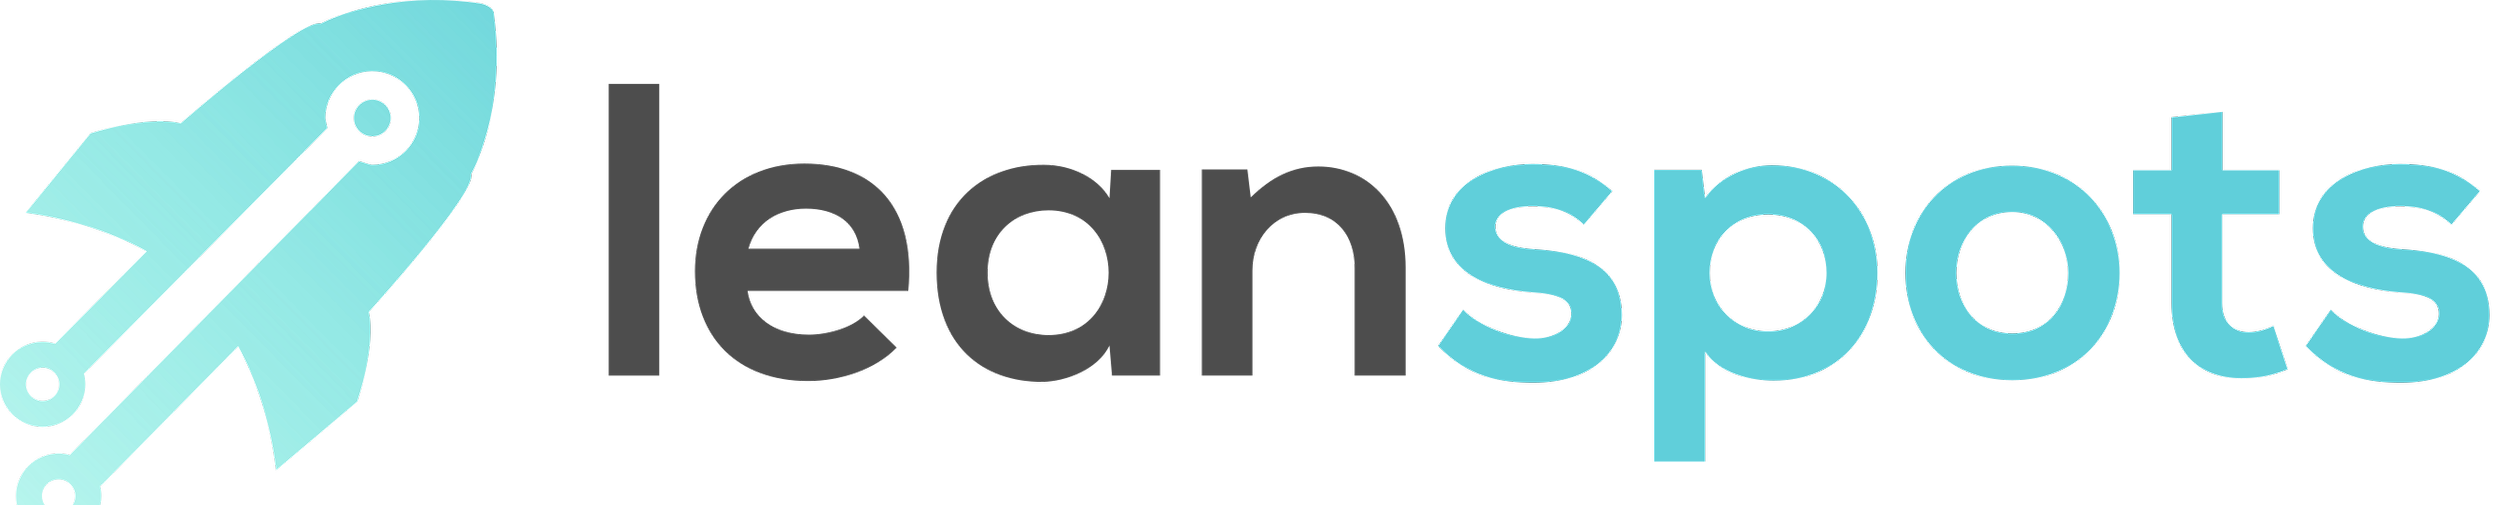 leanspots logo.png